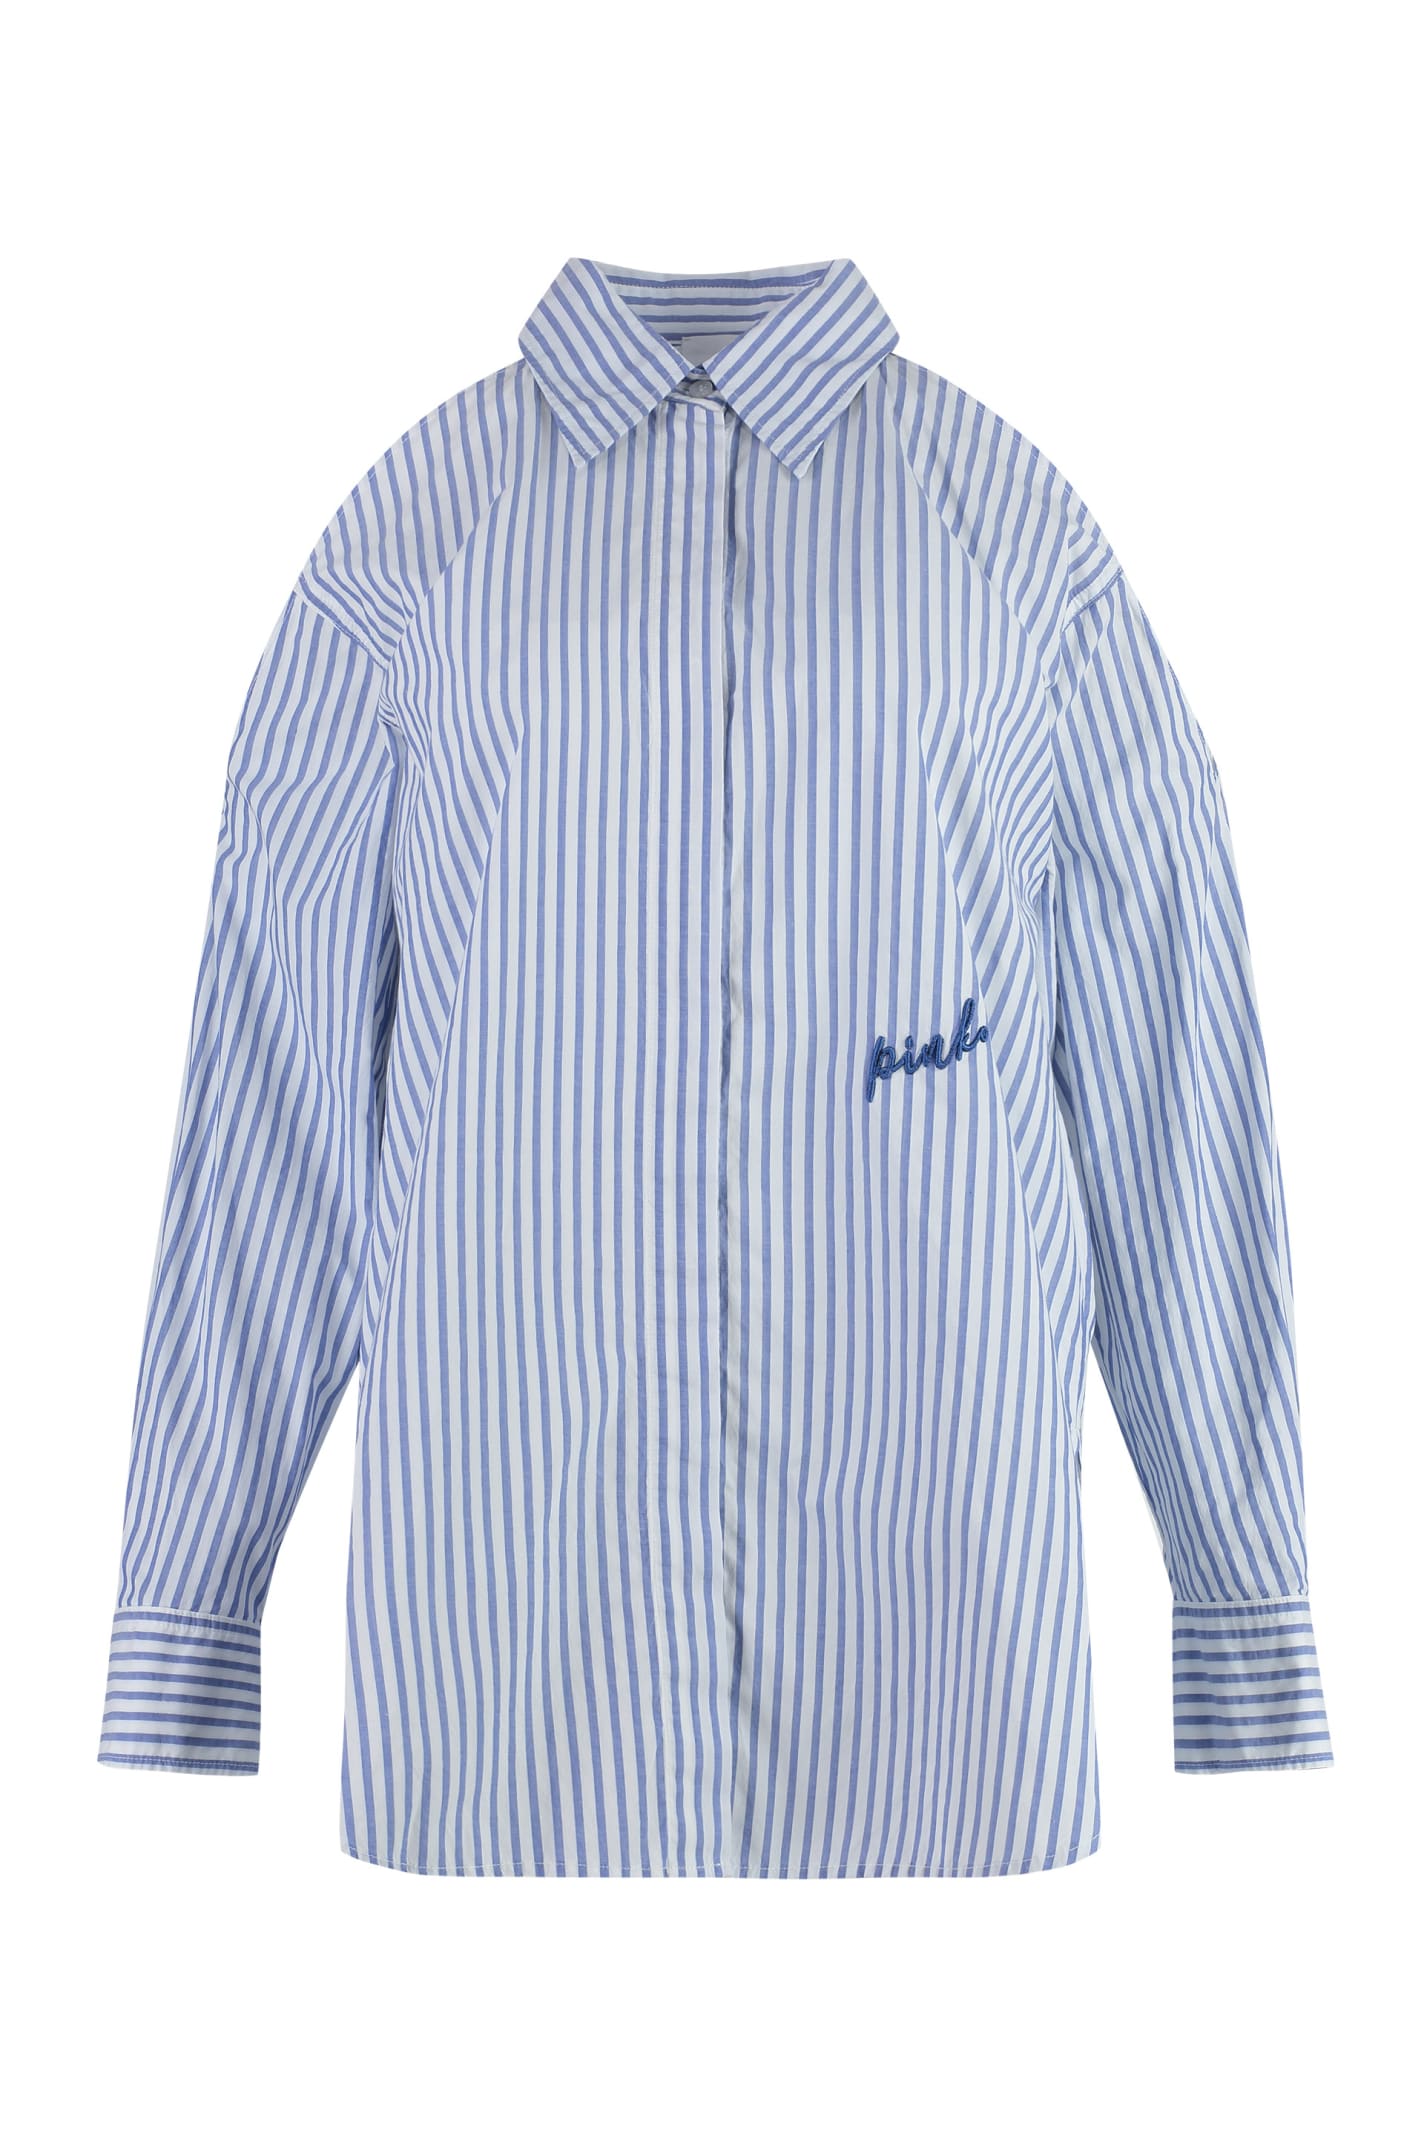 Canterno Striped Shirt